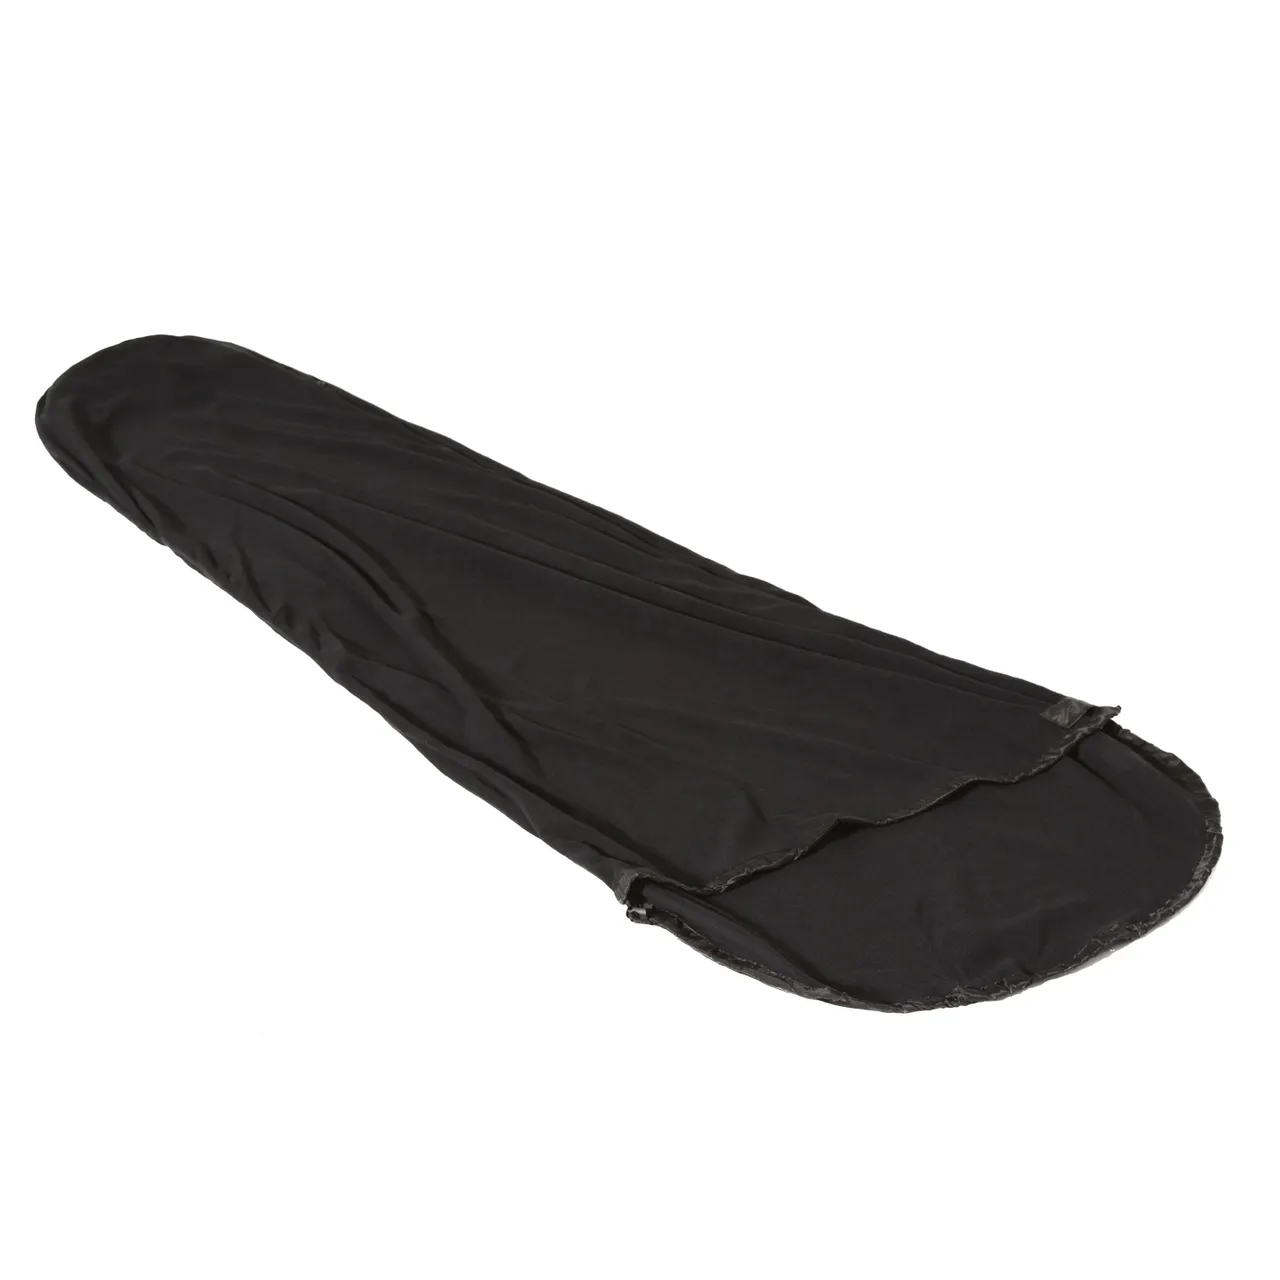 Fleece Sleeping Bag Liner DLX - Mummy, Black